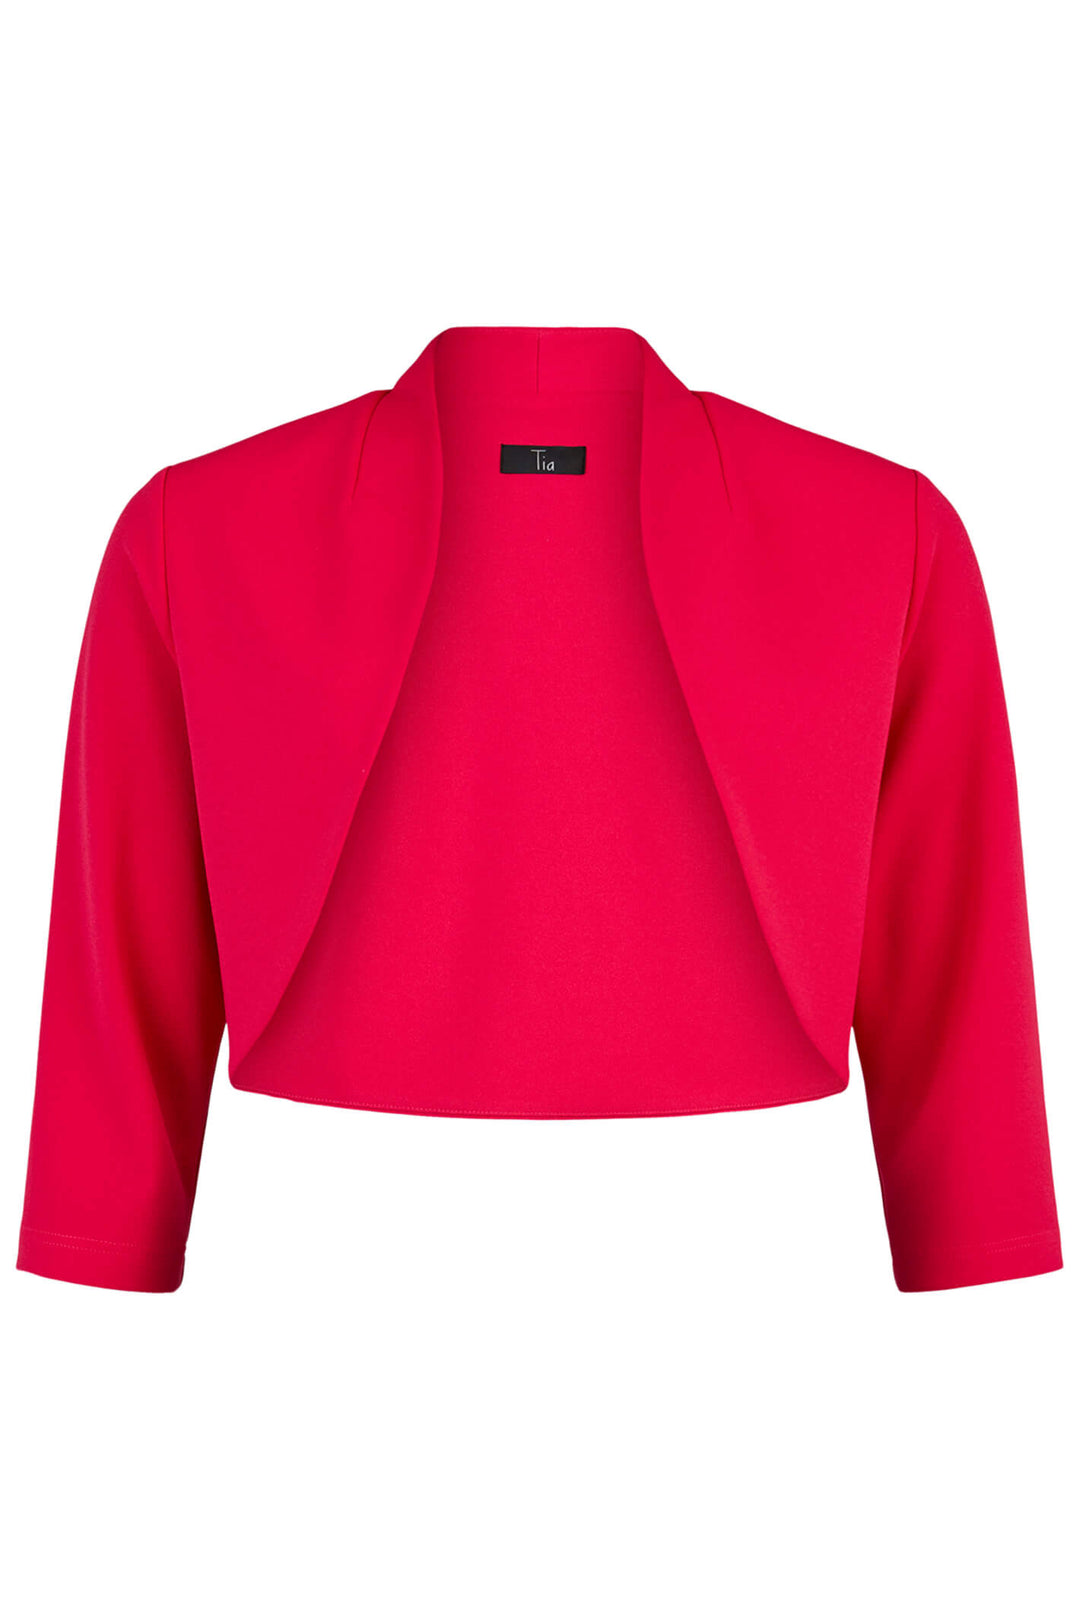 Tia 77605 44 Cerise Pink Bolero Jacket - Experience Boutique